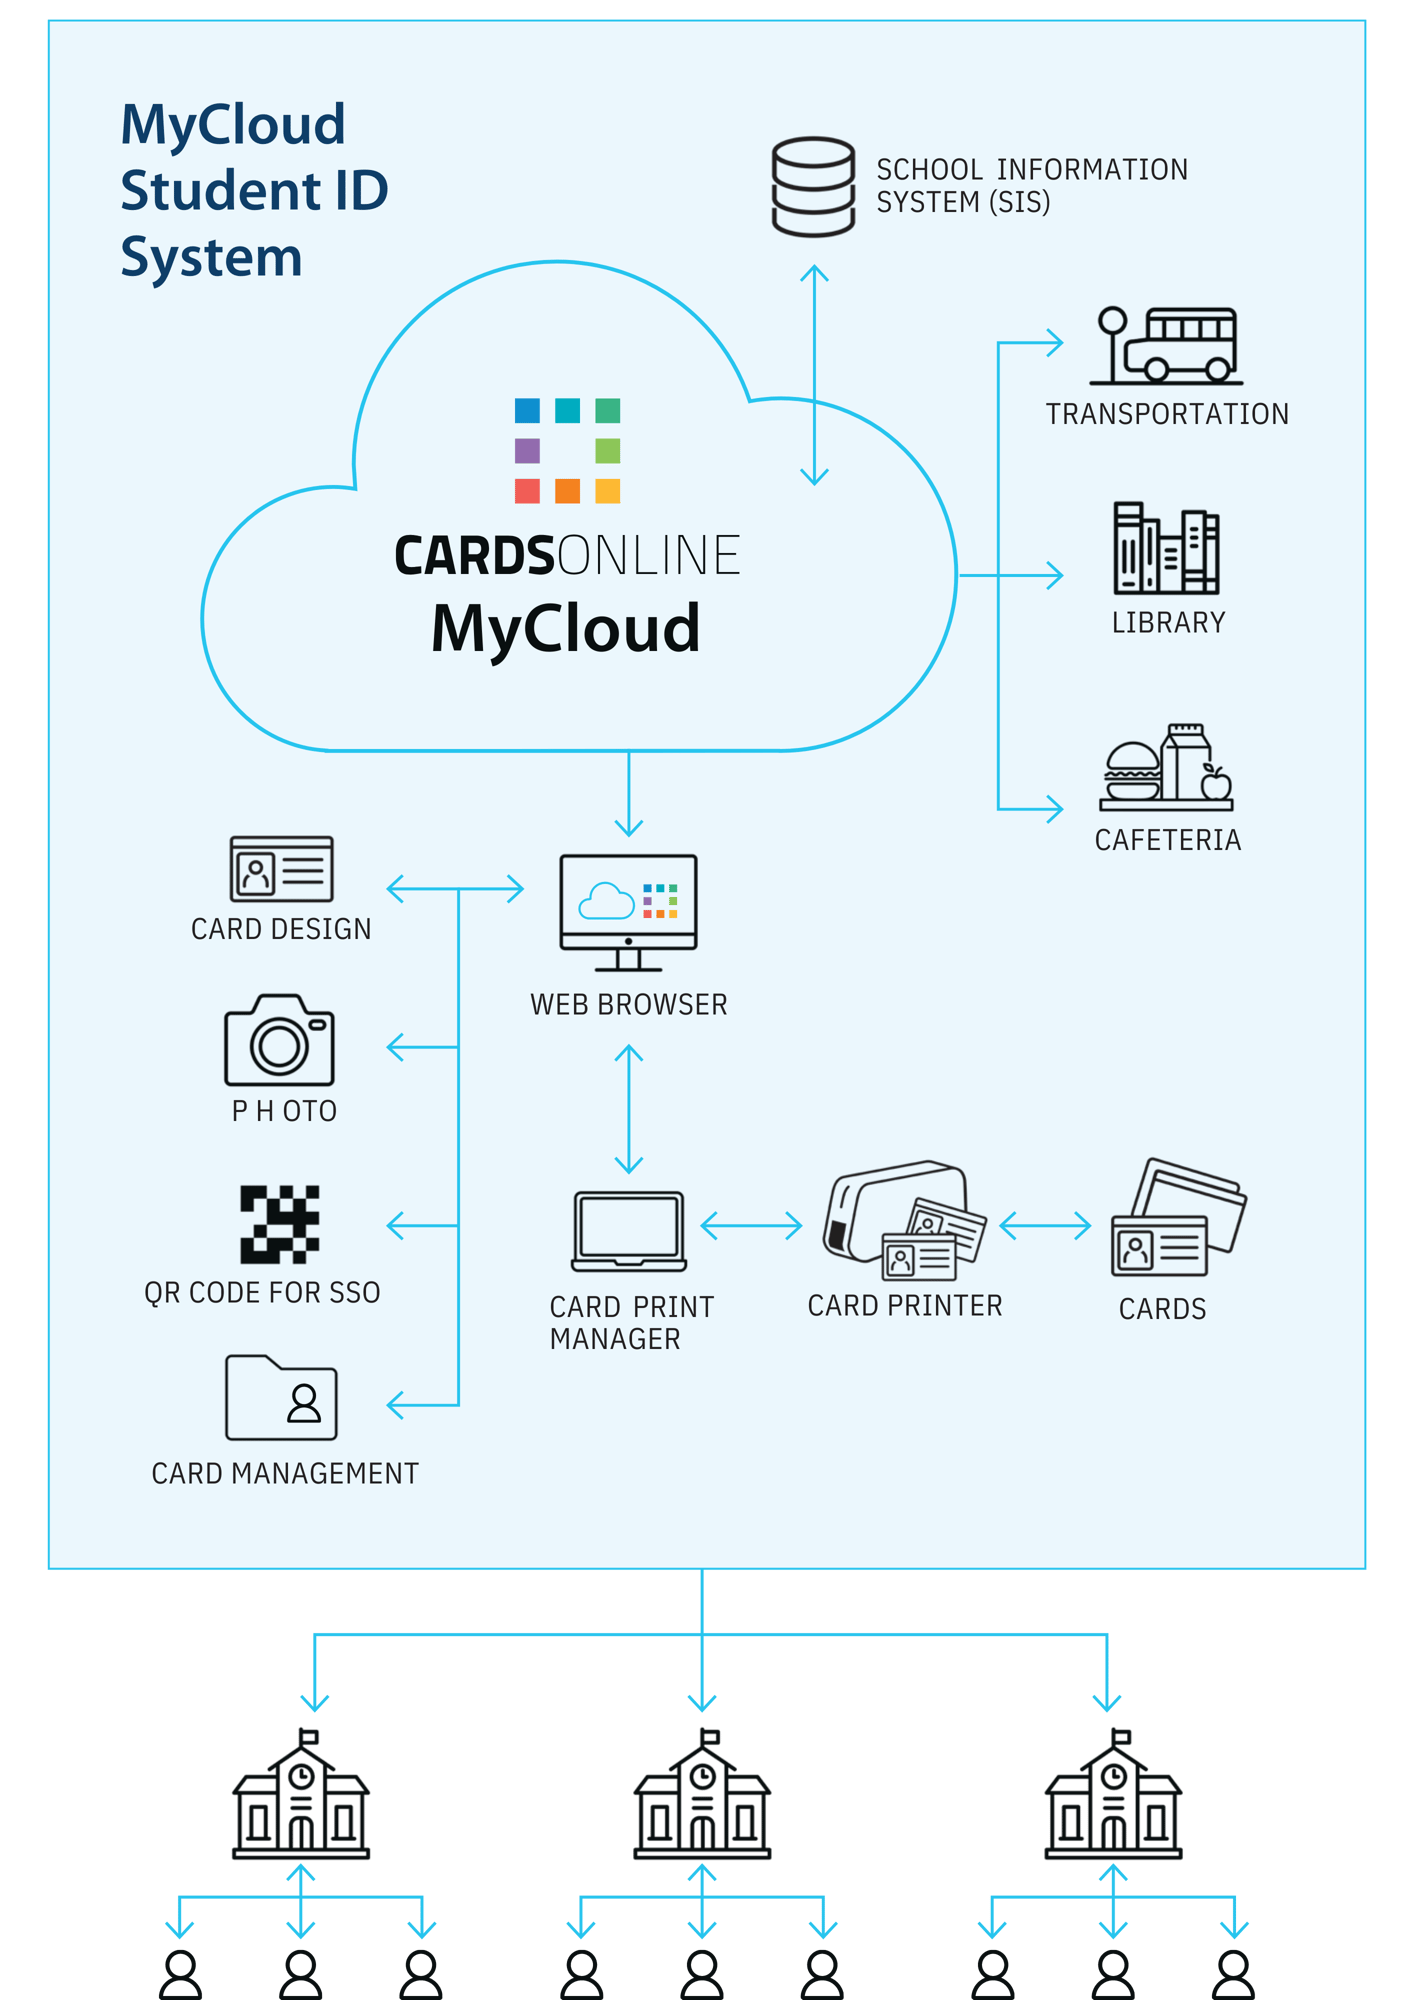 VPG CardsOnline -MyCloud Student ID System